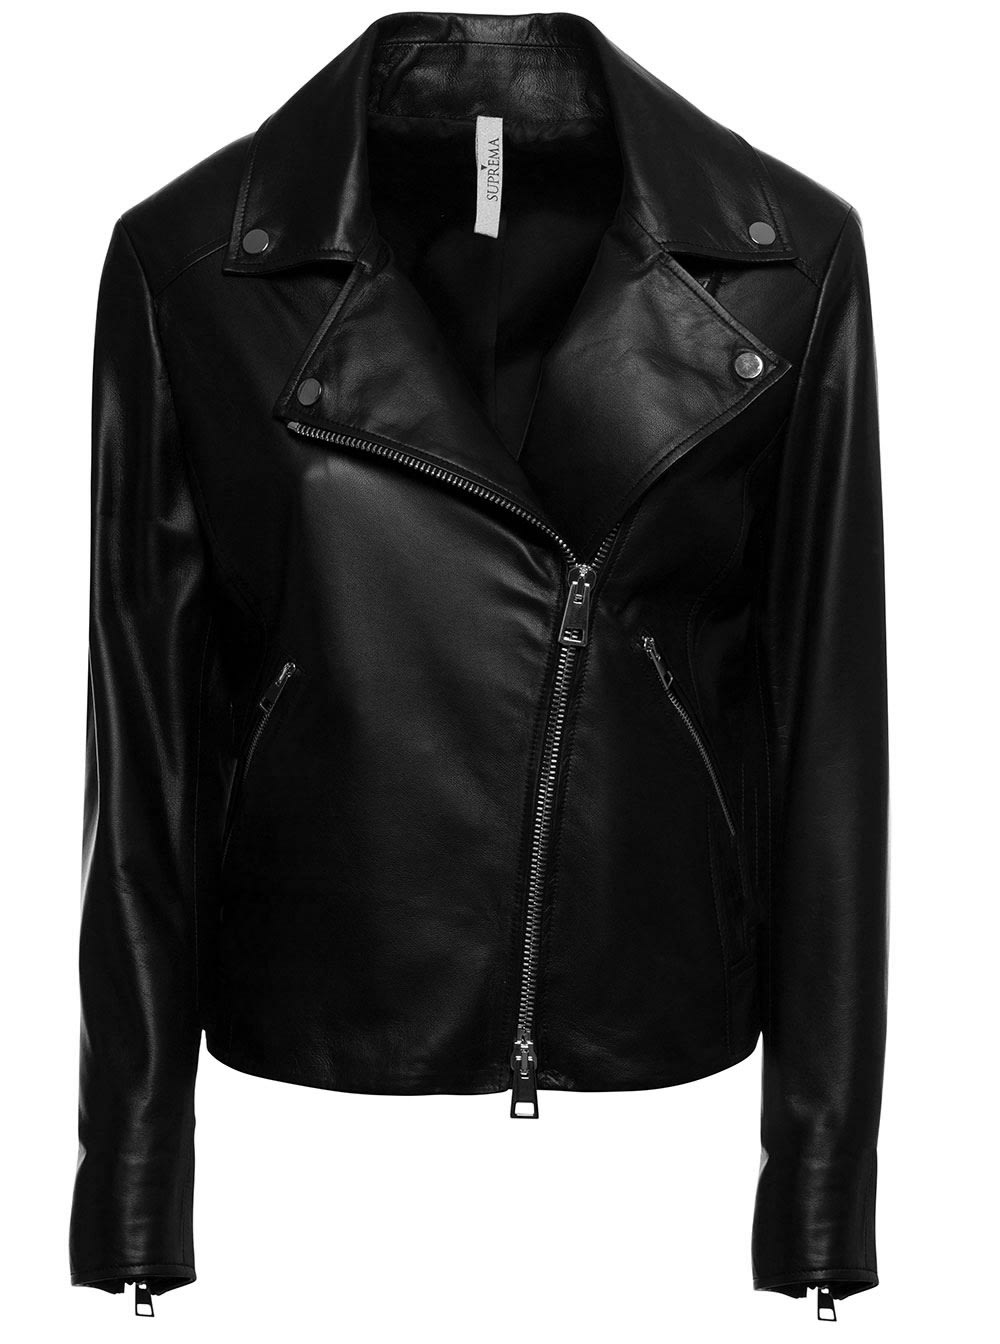 Suprema Black Supreme Leather Womans Jacket